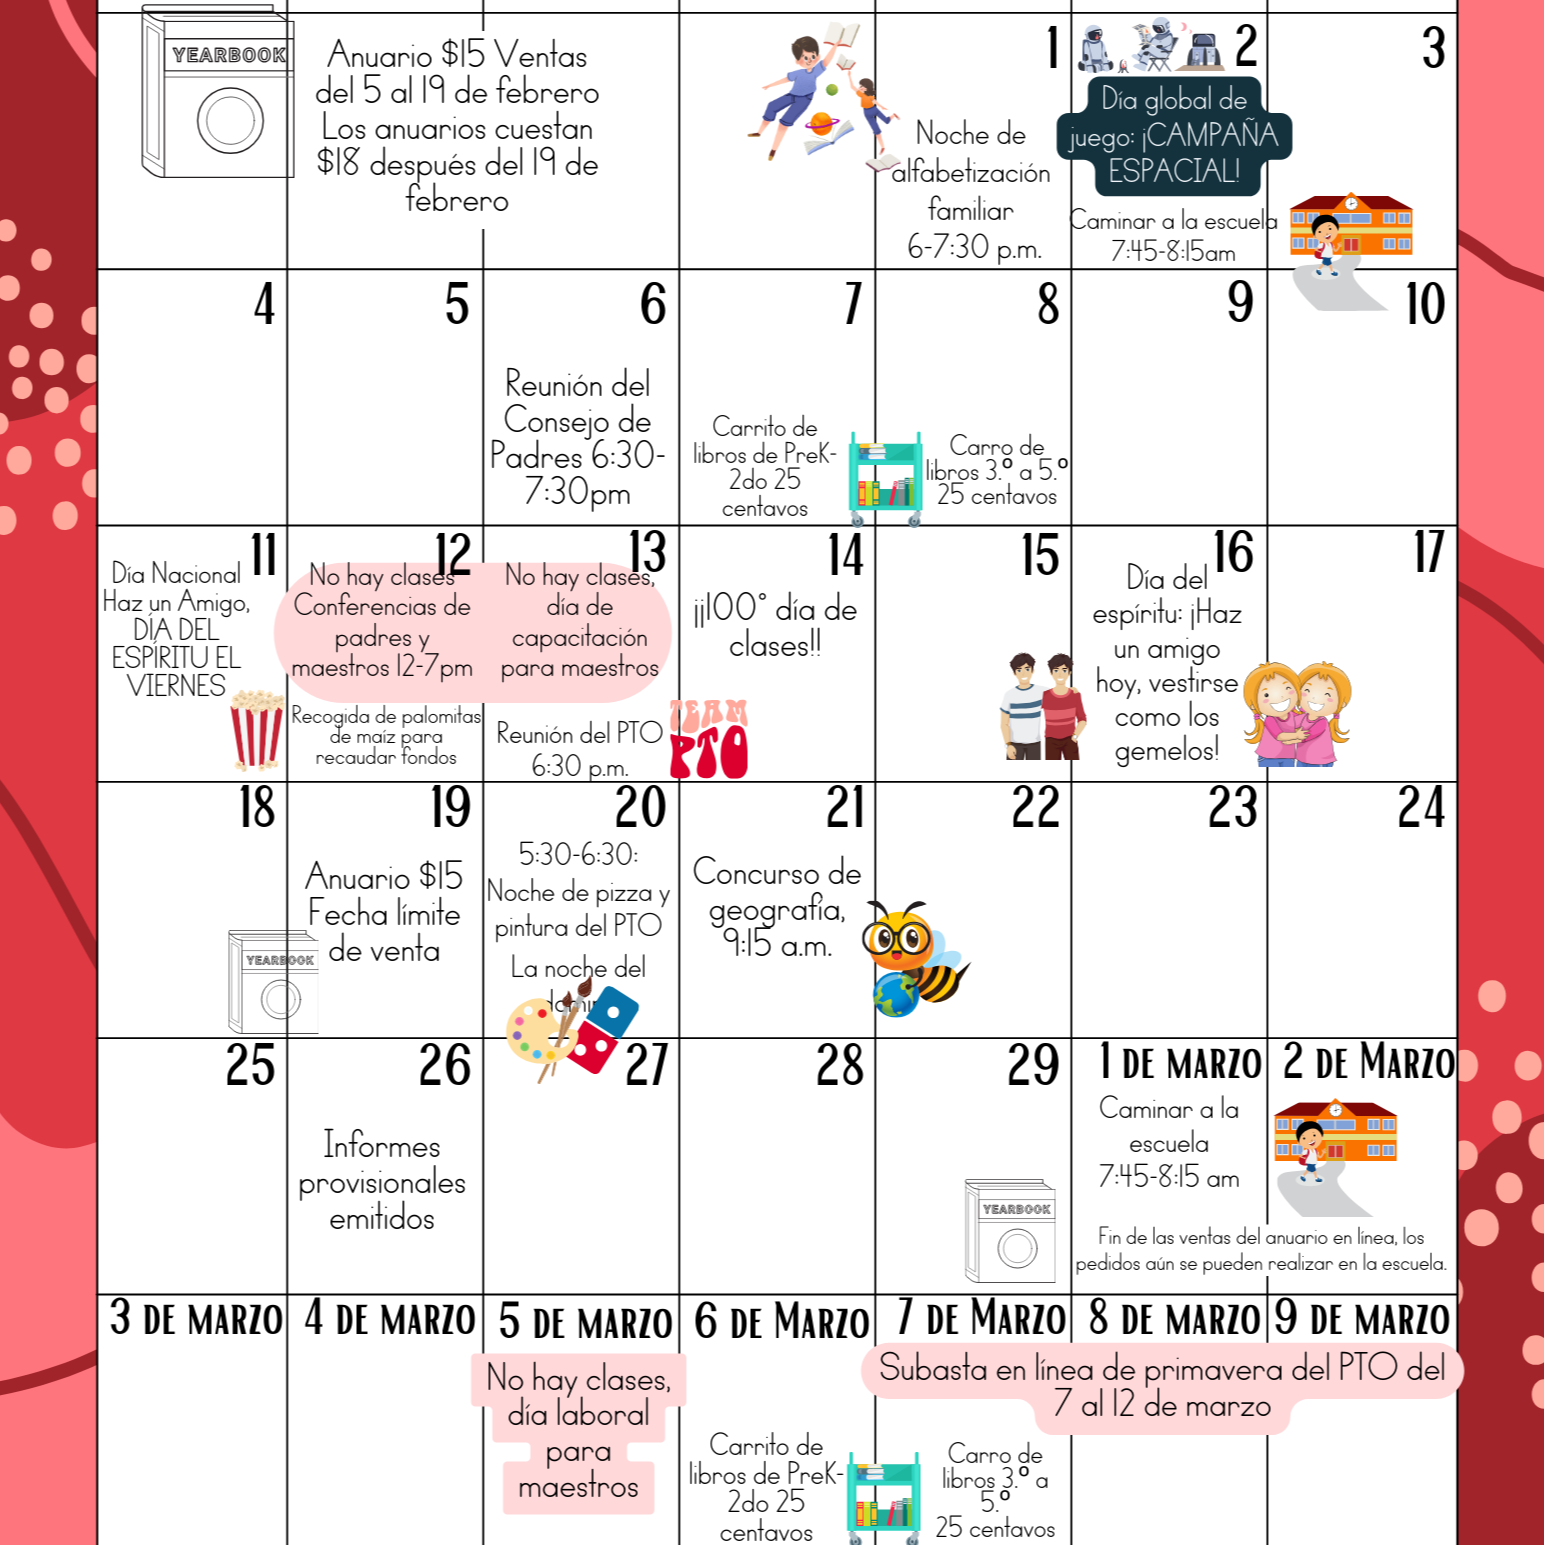 February Events Calendar in Spanish